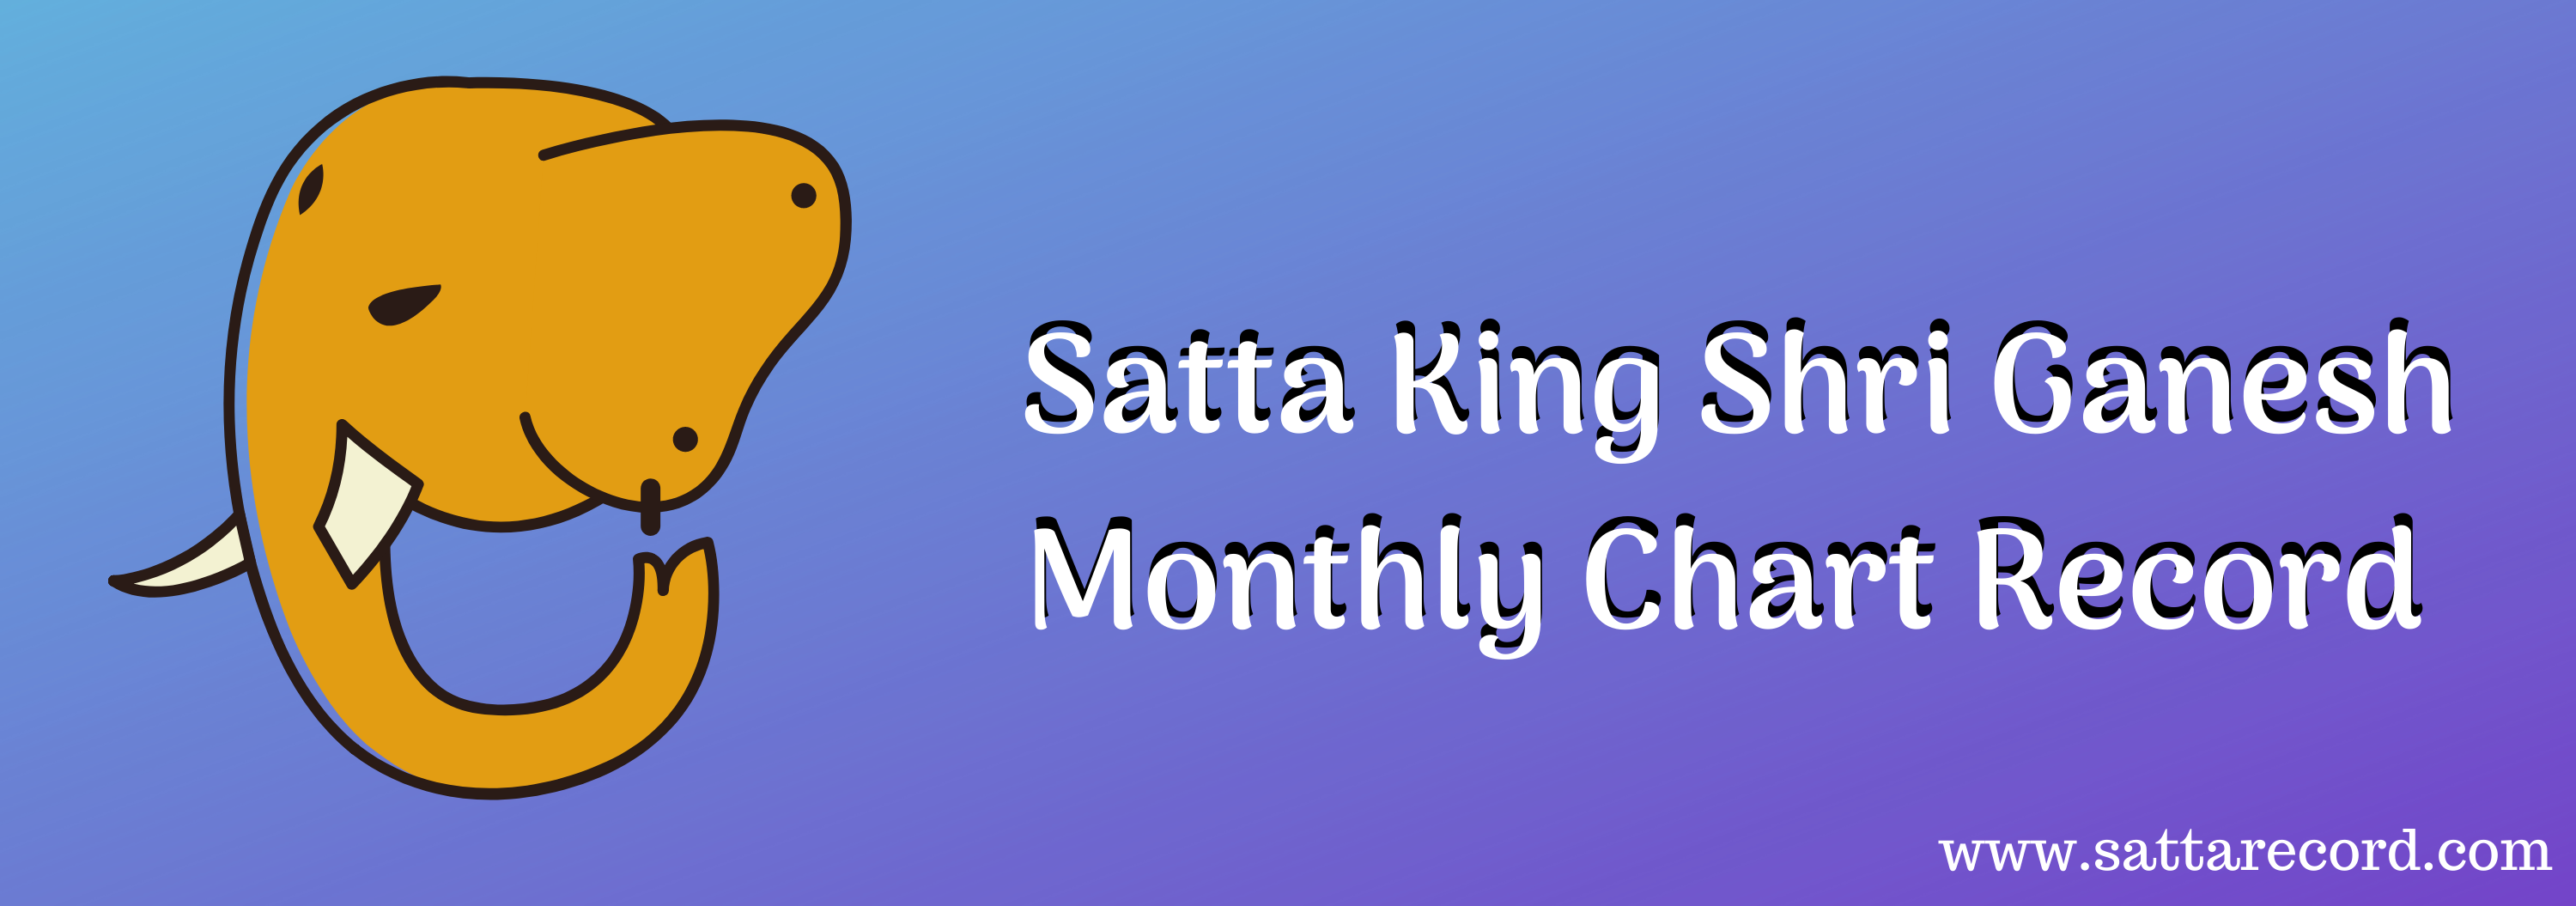 Satta King Shri Ganesh Monthly Chart Record